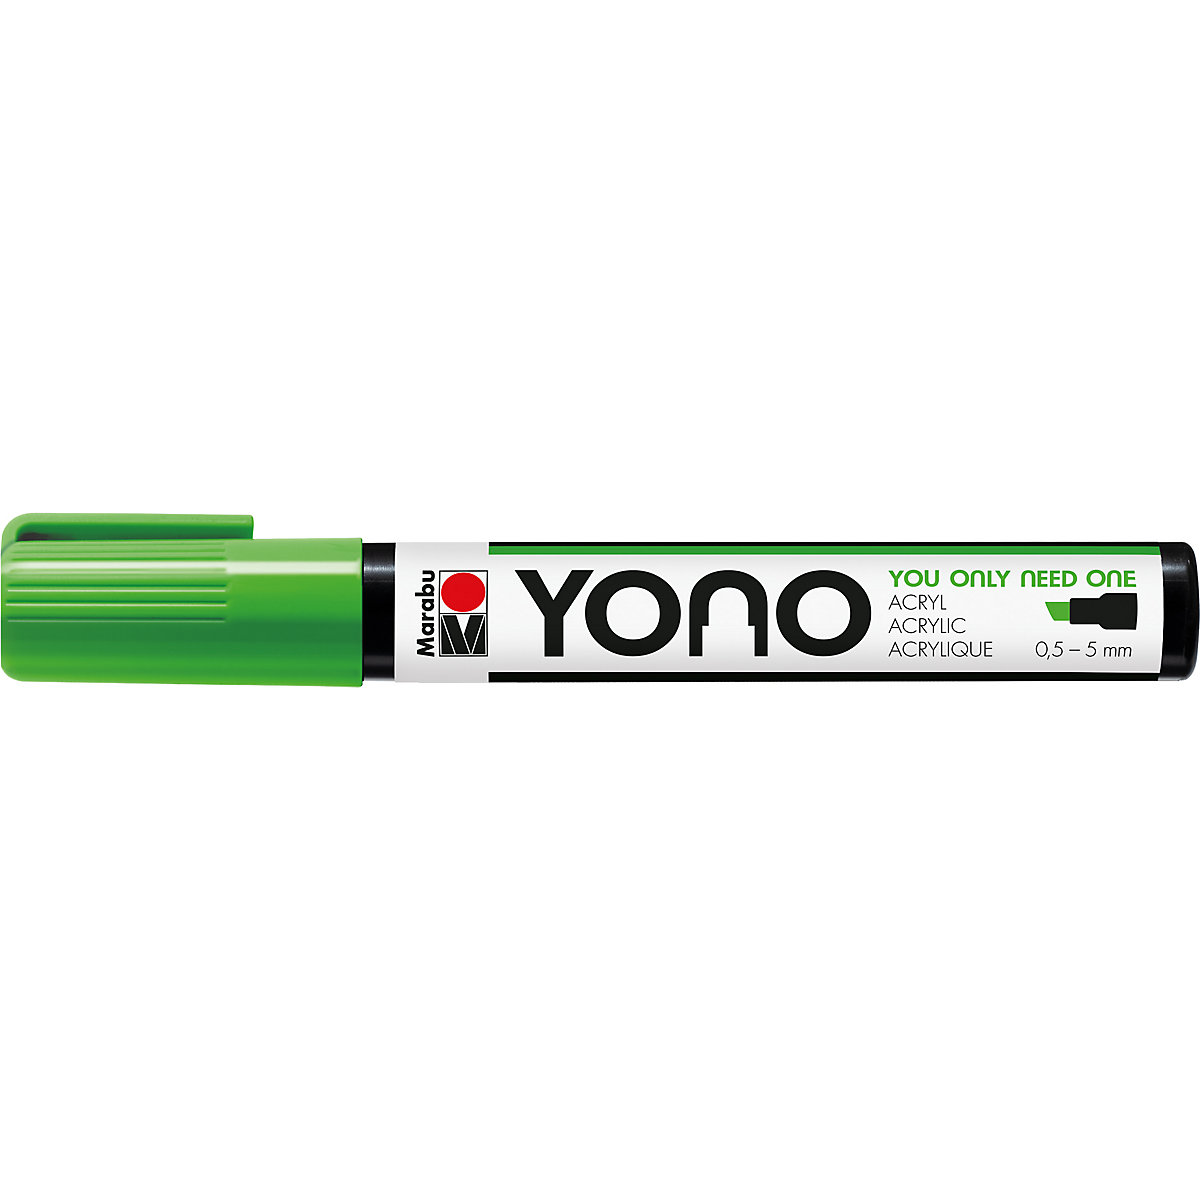 YONO Marker Reseda 061 0 5-5 mm